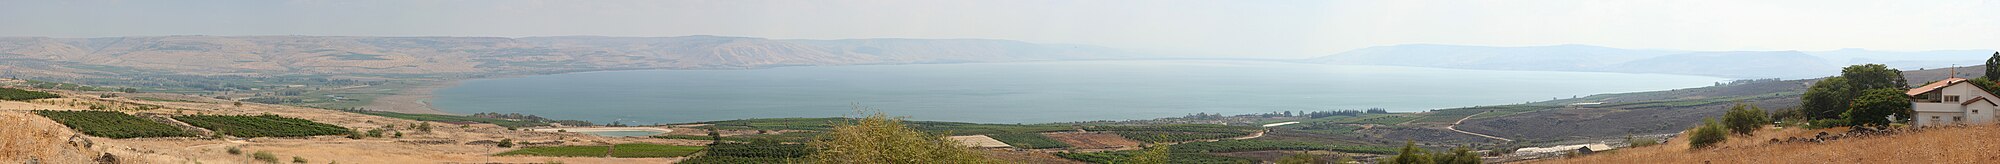 Galilejsko jezero, panorama